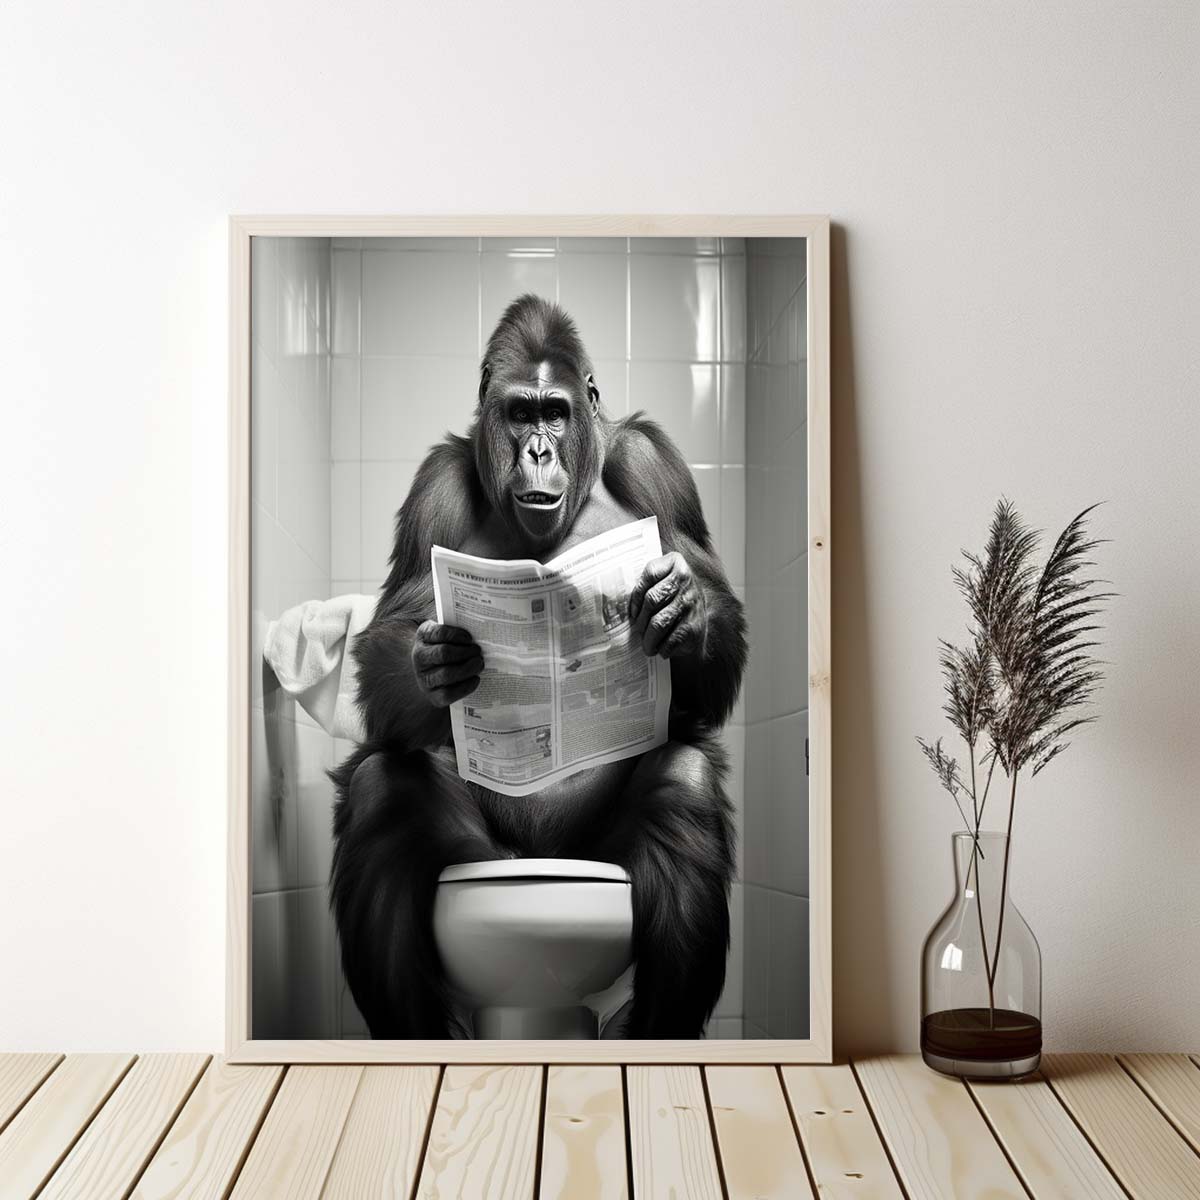 Gorilla 01 Sitting on the Toilet Reading a Newspaper, Canvas Wall Art, Funny Animals Wall Art, Funny Bathroom Wall Decor, Print Minimalist Modern Farmhouse Art Bathroom Wall Decor